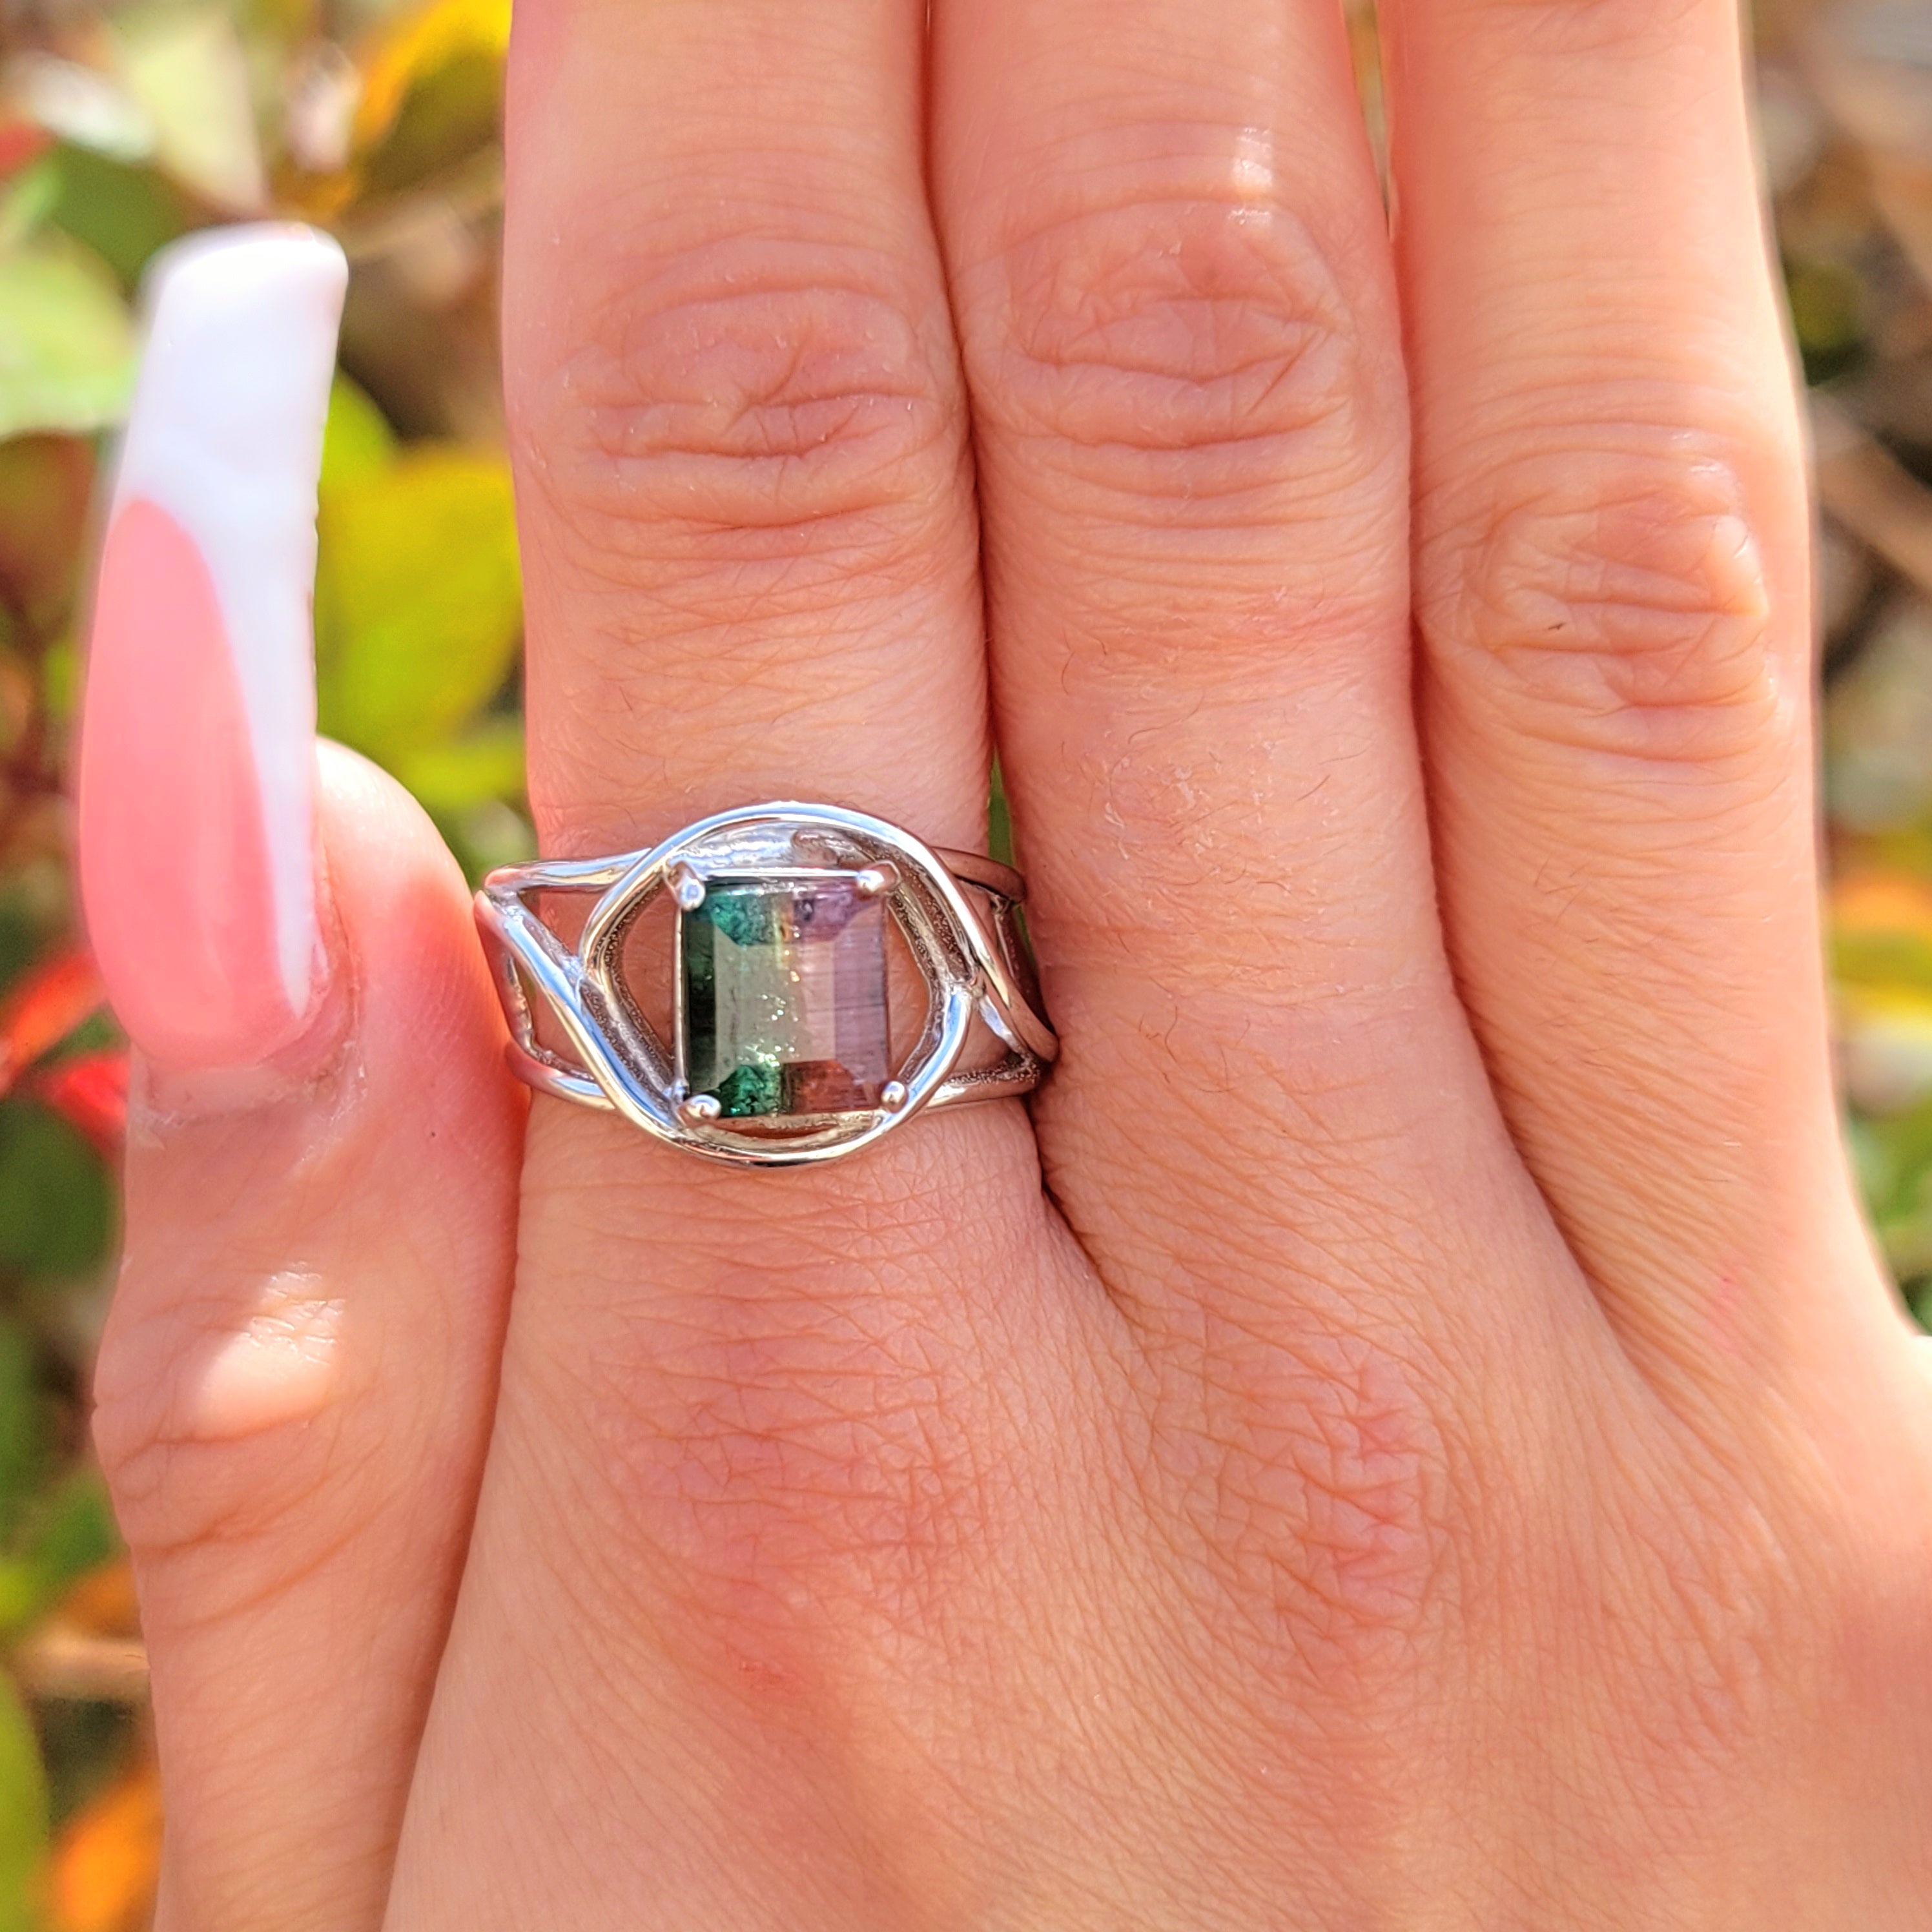 Watermelon Tourmaline Adjustable Finger Bracelet Ring for Healing, Joy and Love